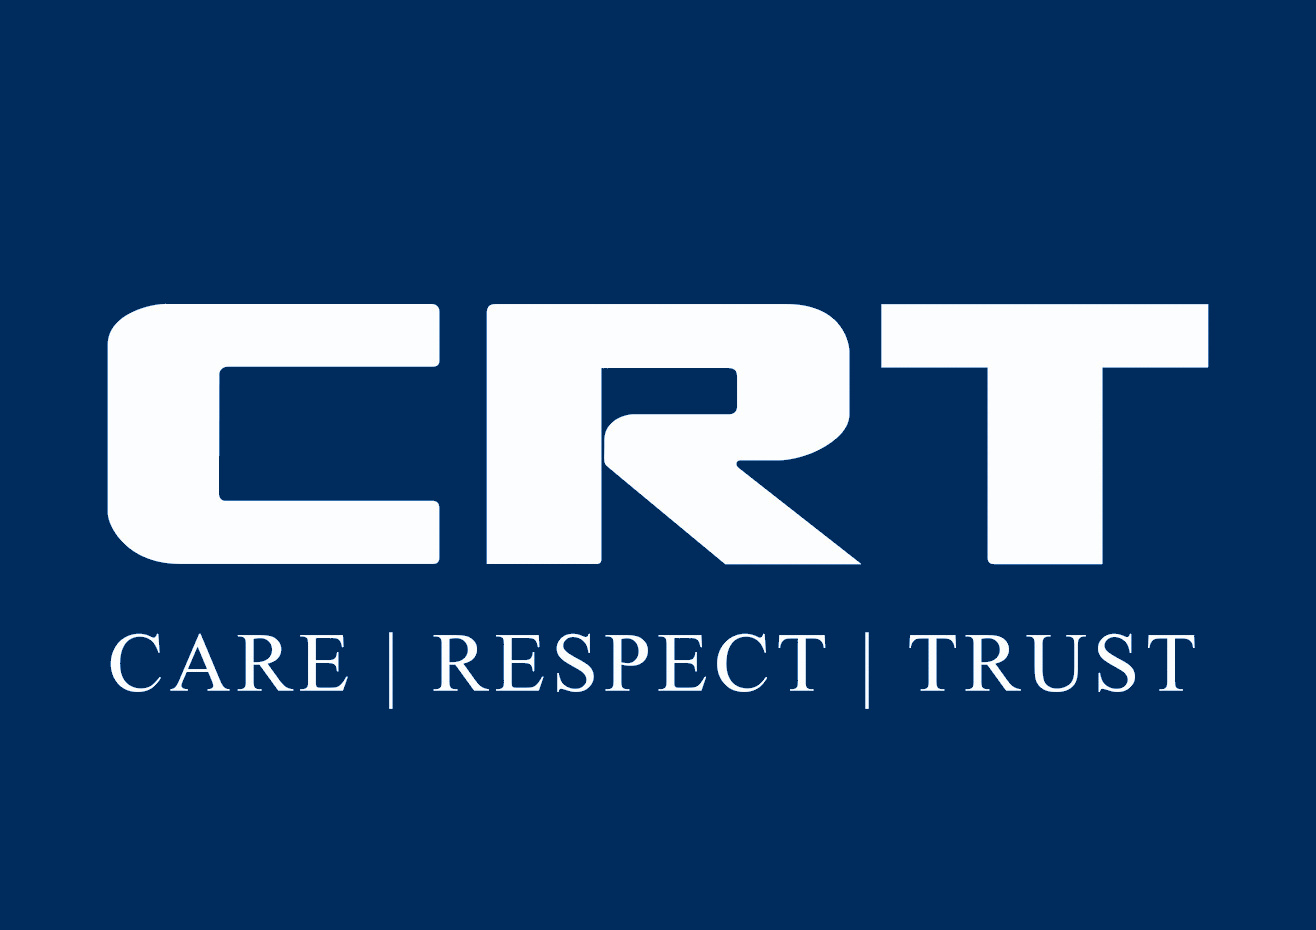 CRT Insights Technologies